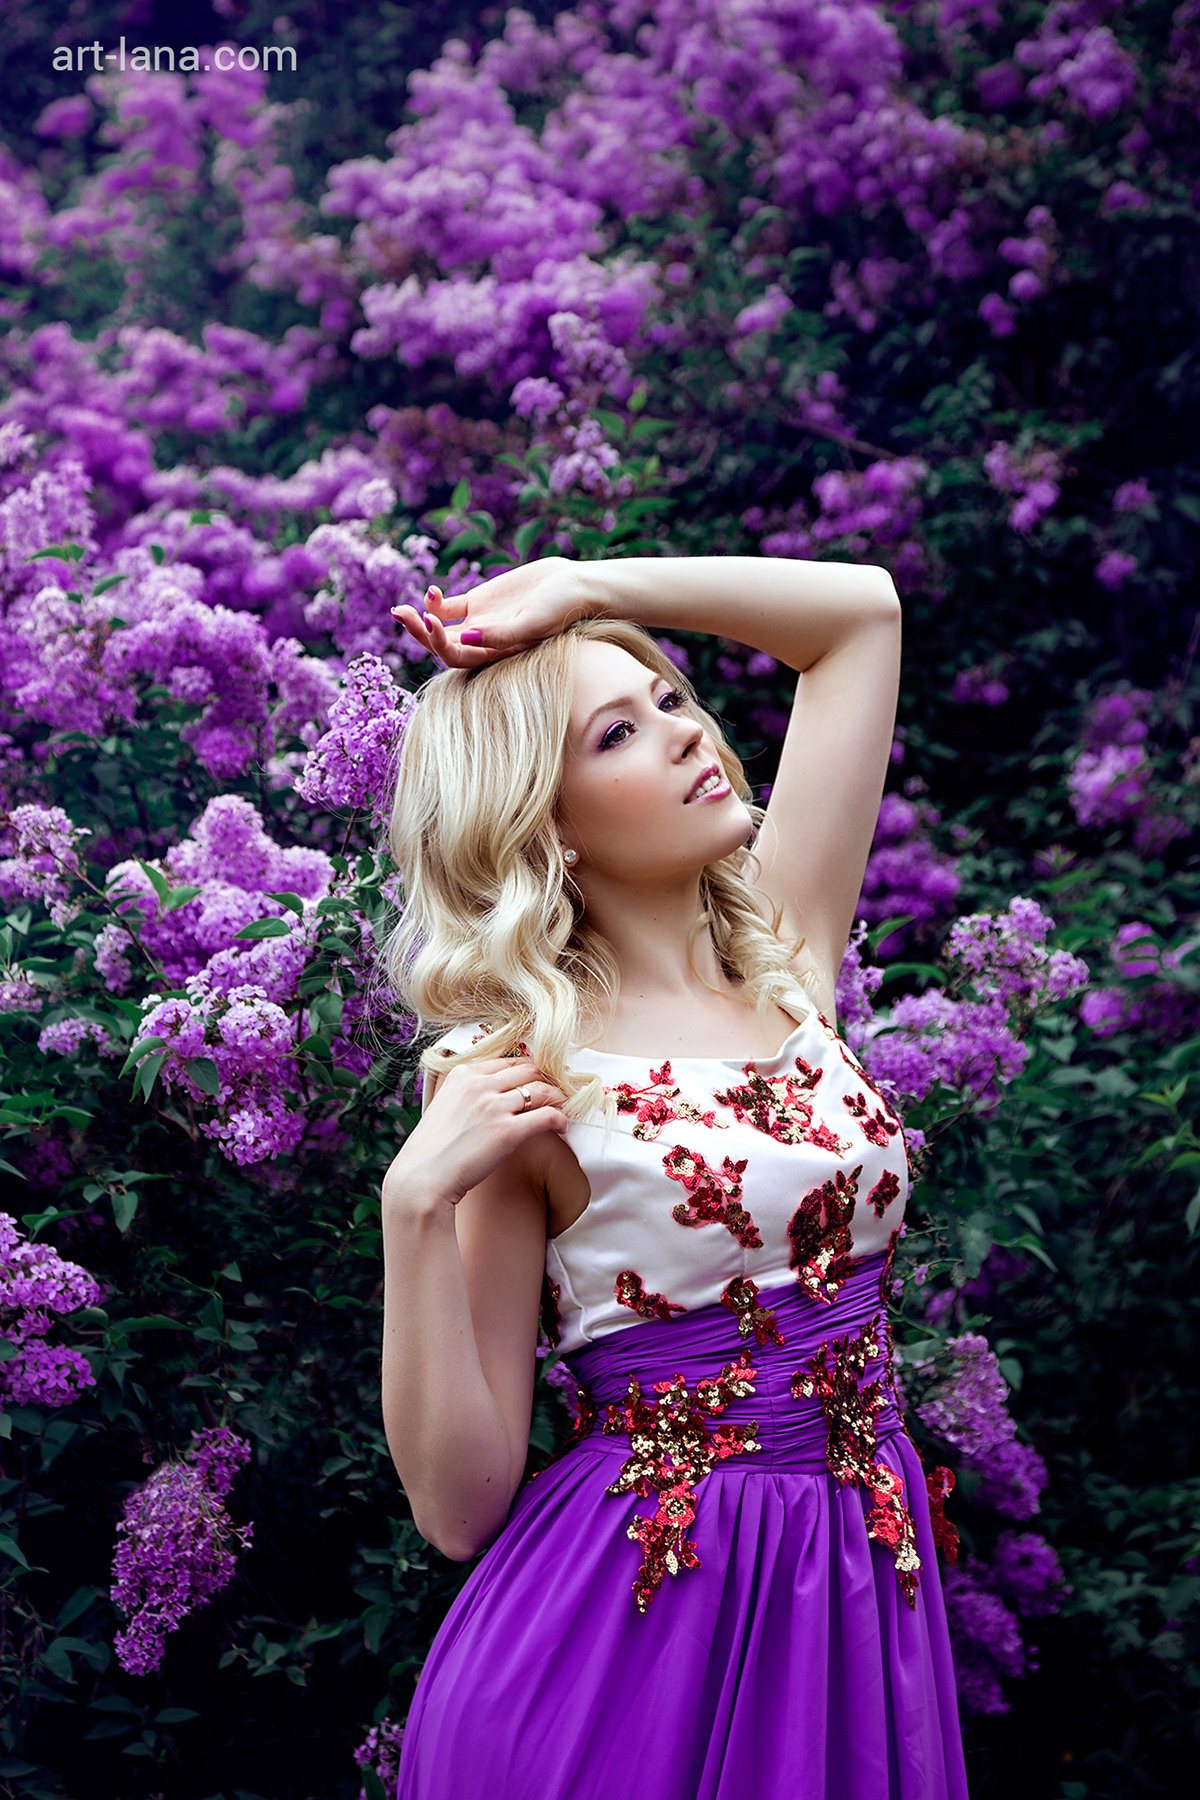 photoshoot lilac garden spring model blonde Flowers beauty blooms dress portrait light romantic colorful